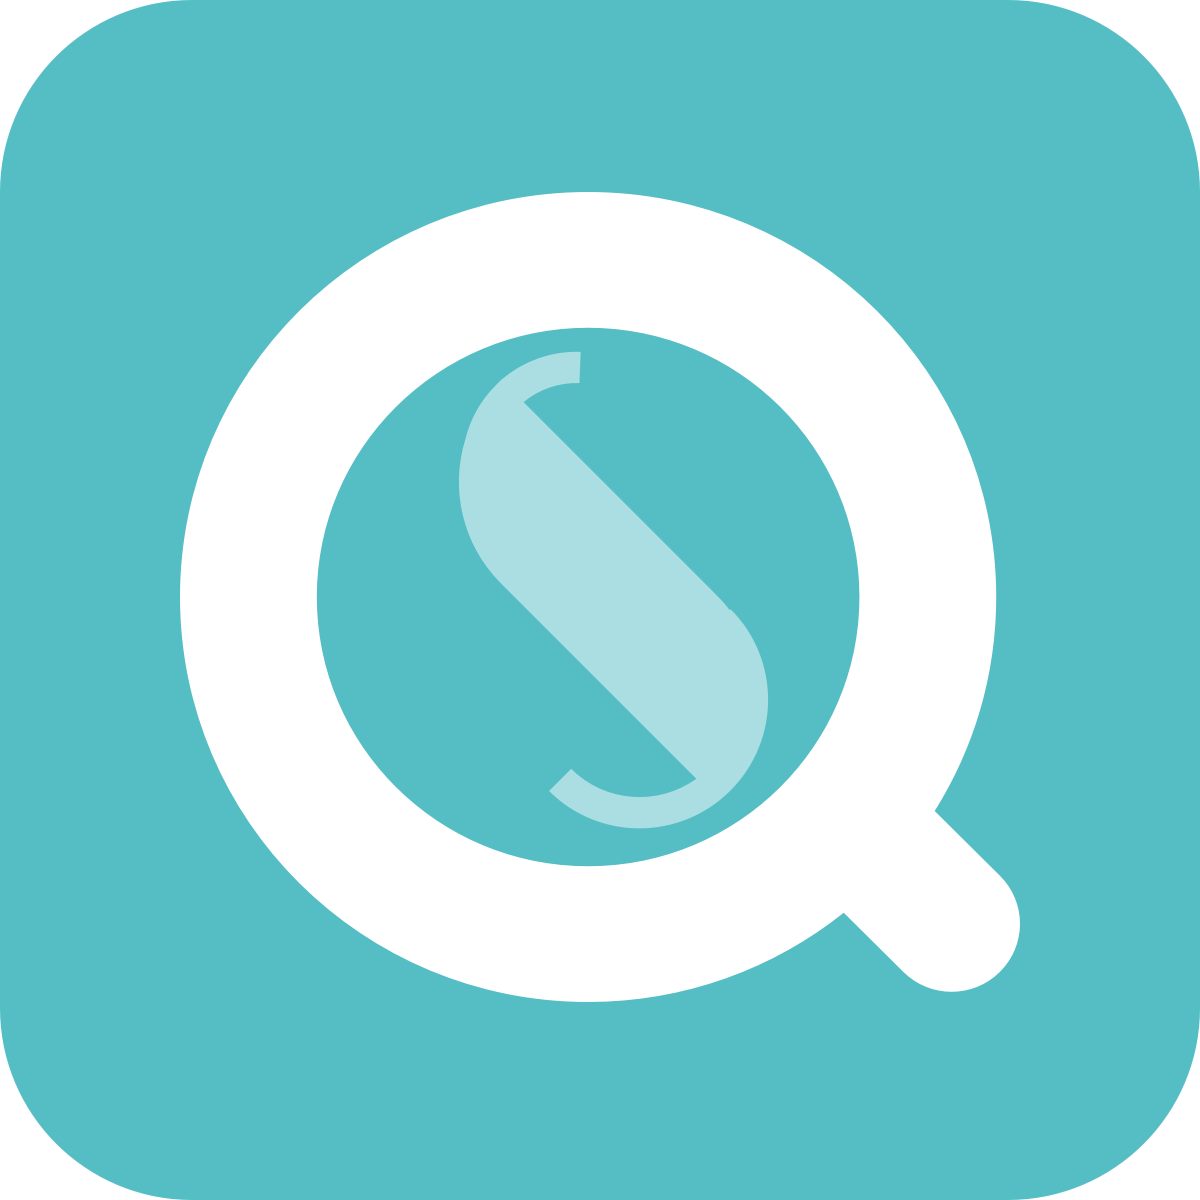 Qksource: Winning Source for Shopify